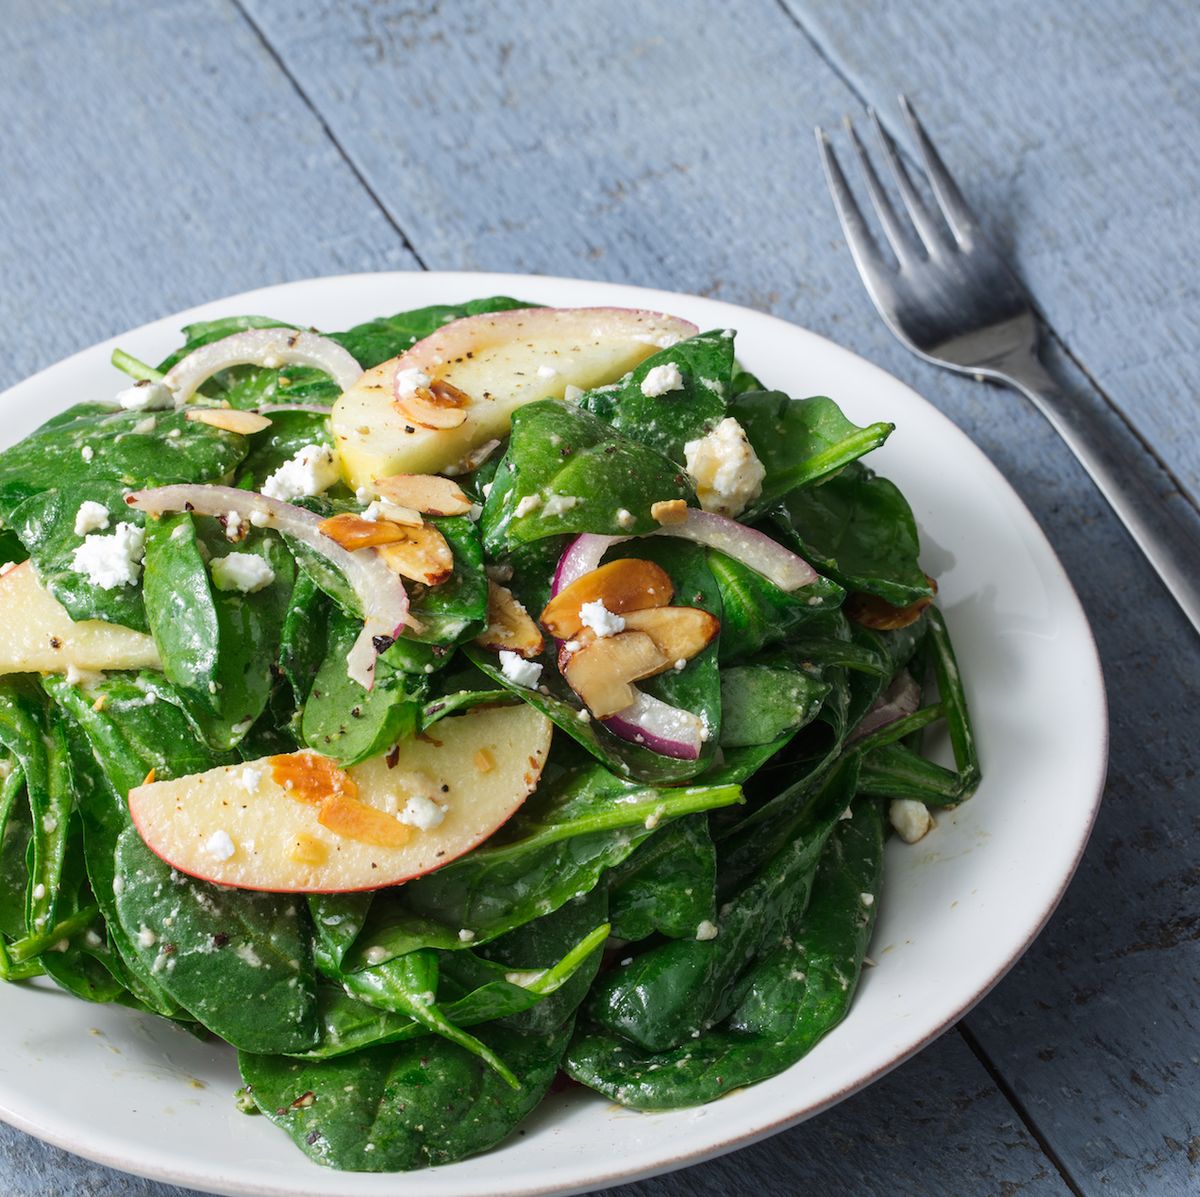 spinach salad recipes